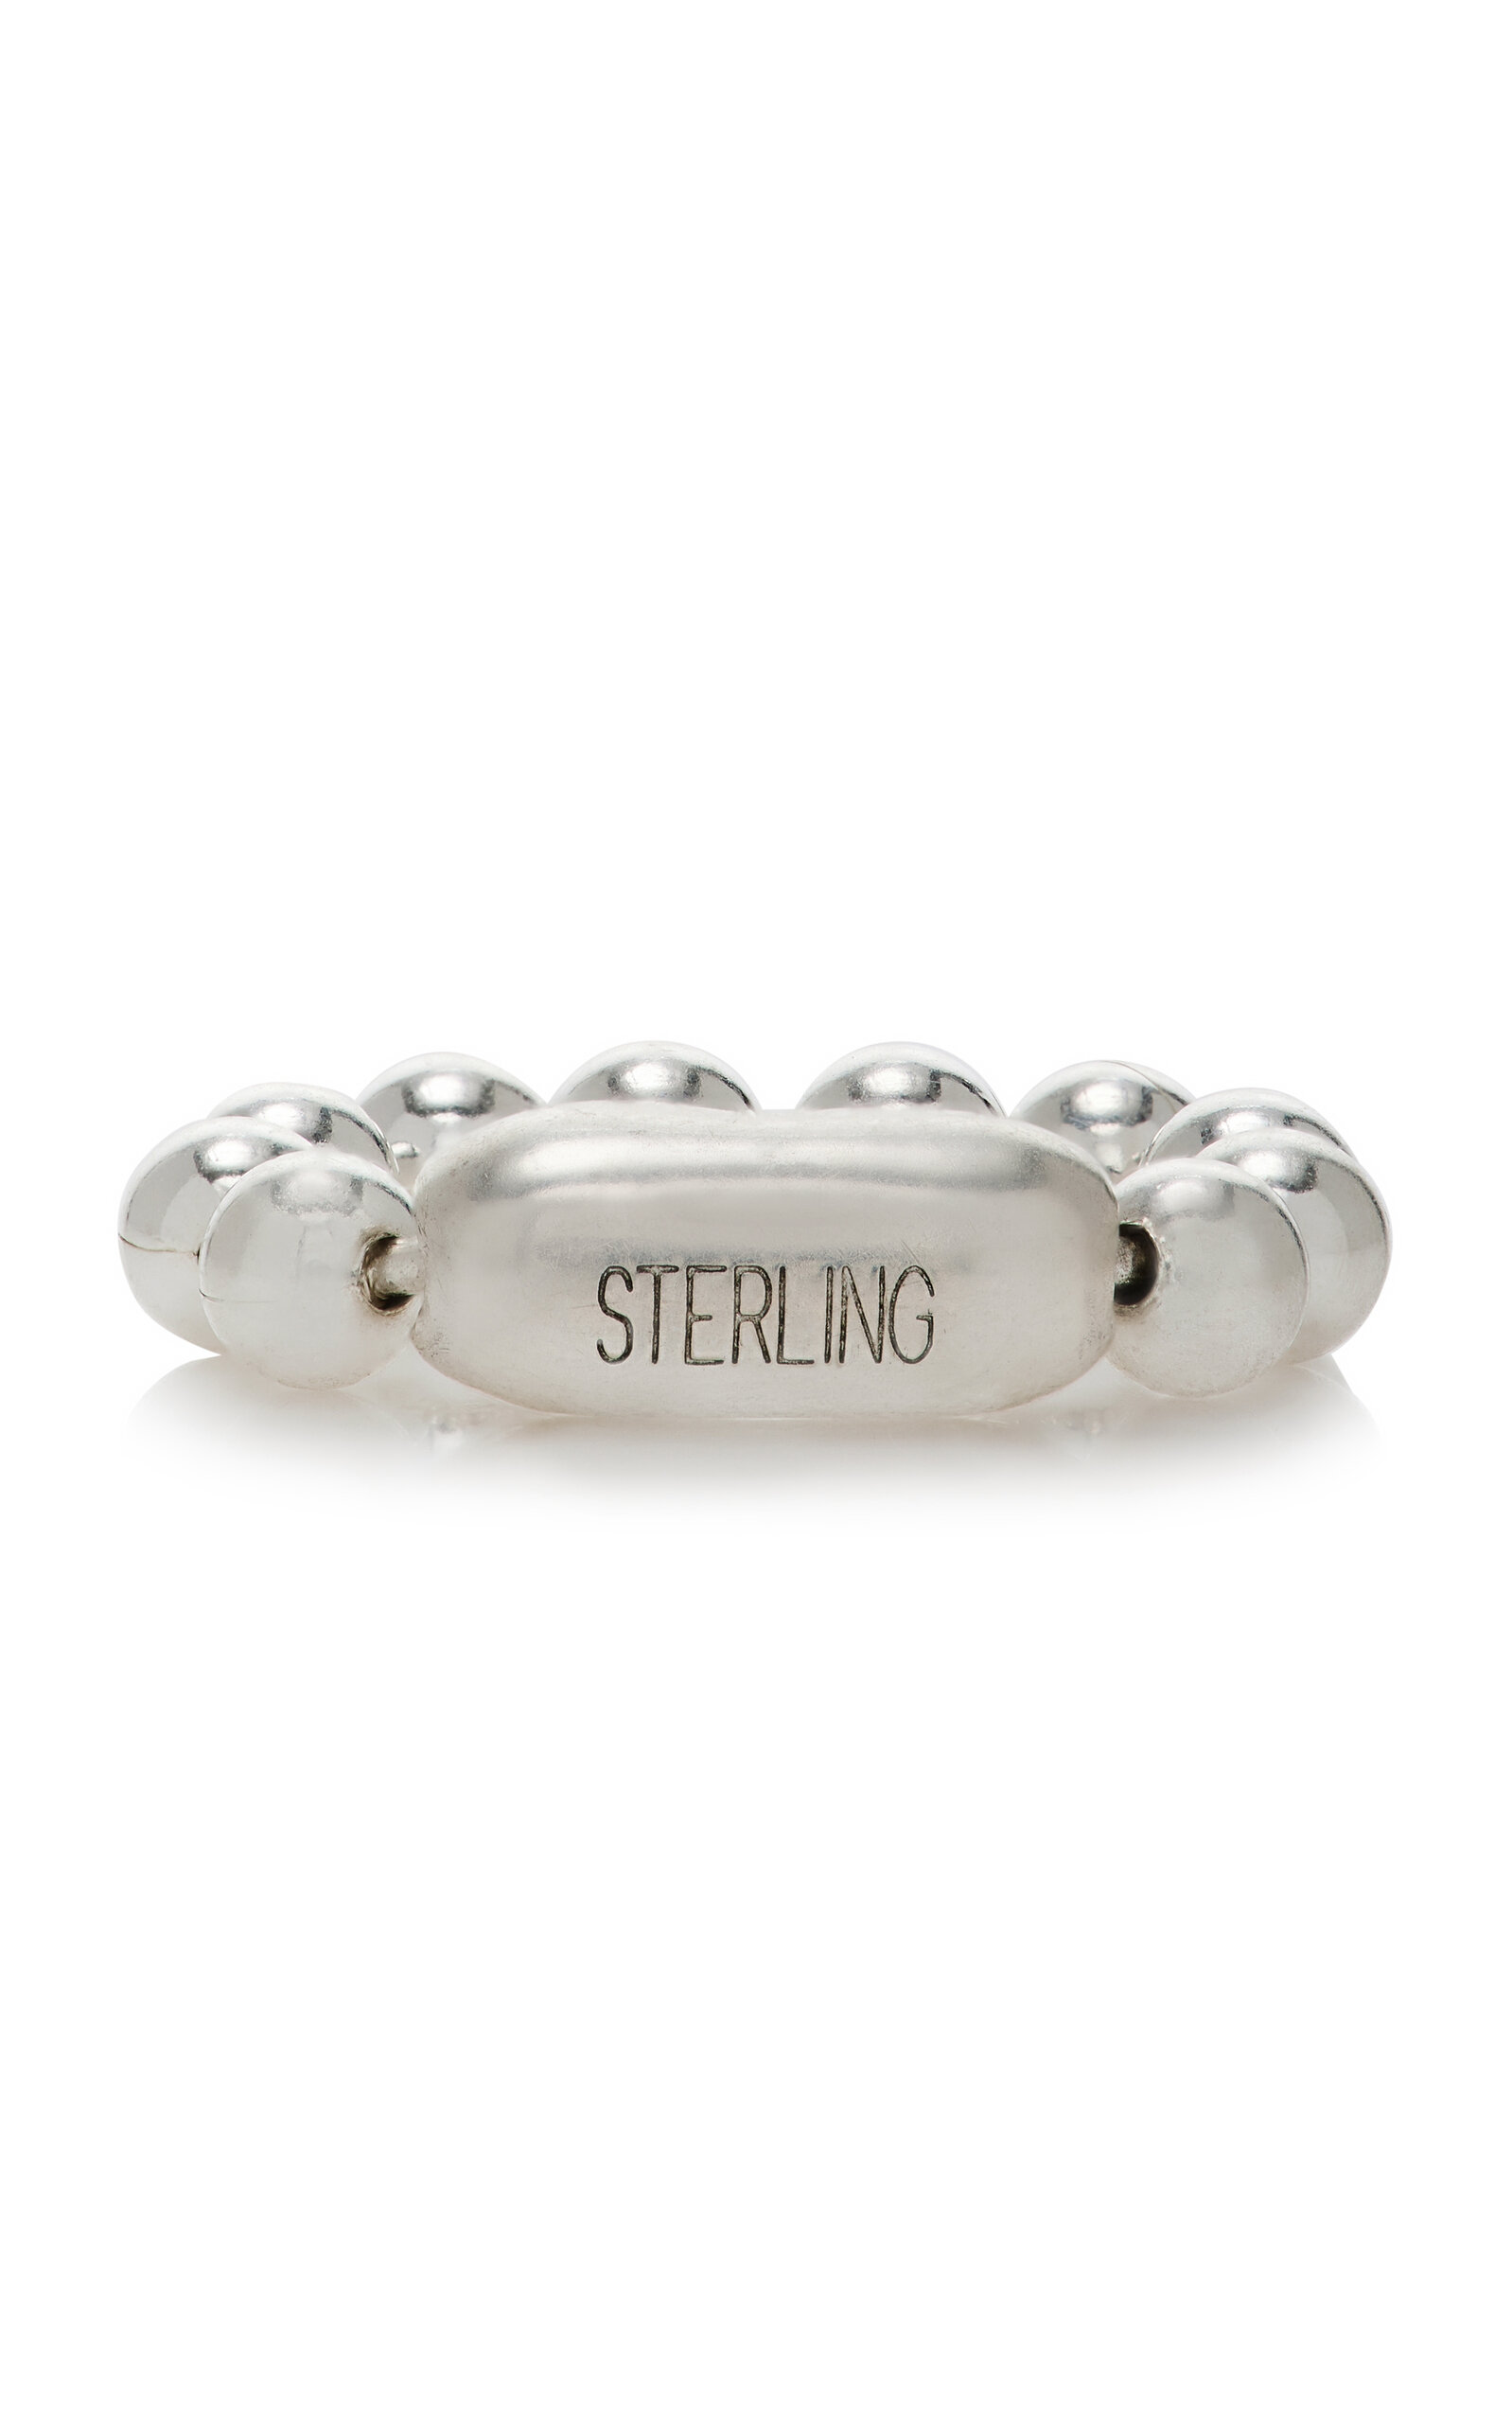 Martine Ali Oli Sterling Silver Ring